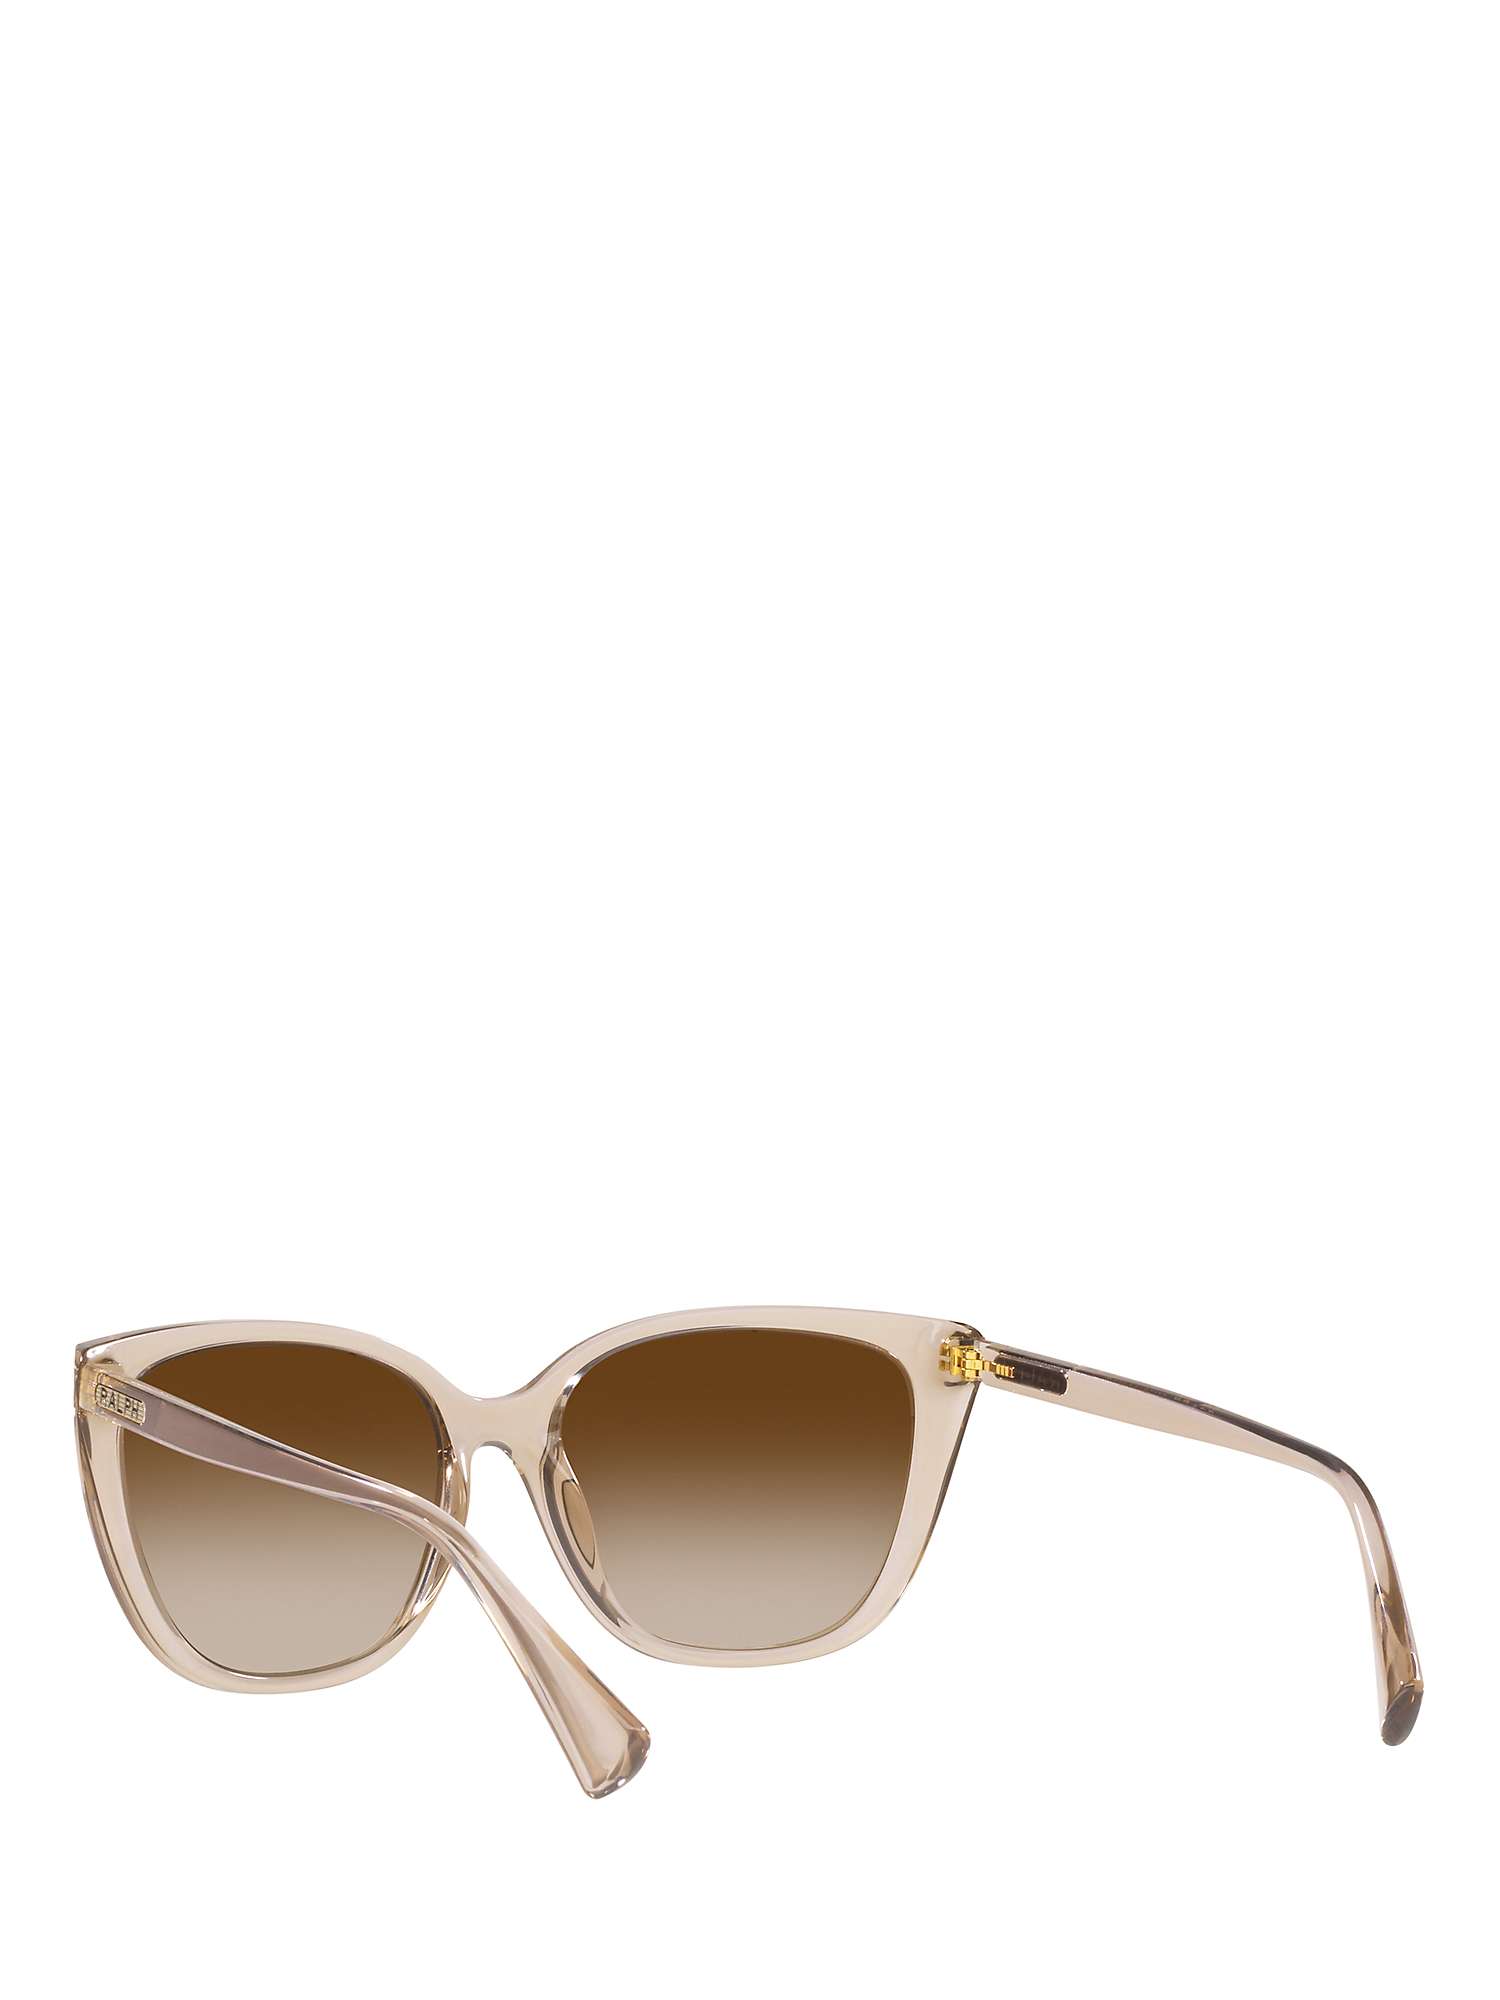 Buy Ralph RA5274 Women's Butterfly Shape Sunglasses Online at johnlewis.com